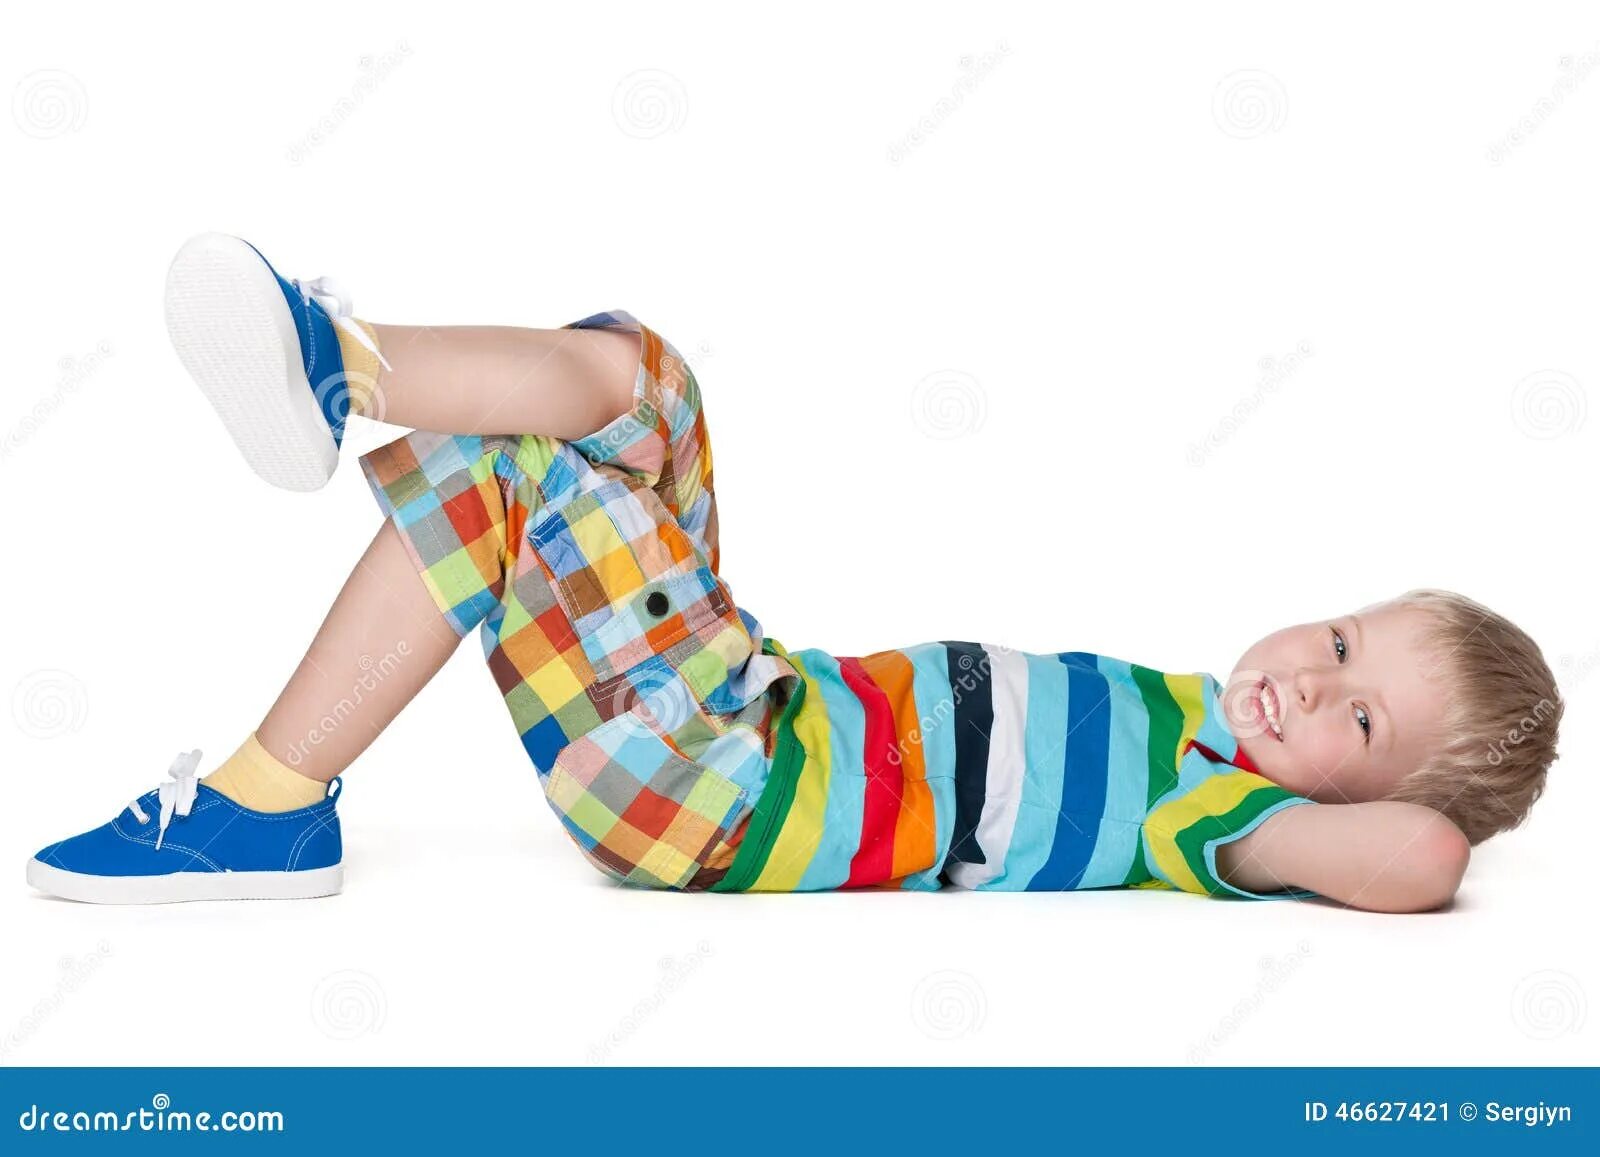 I can drop. A boy on White. Resting boys. A boy in сруслукув Shirt. Kid Rolling on the Floor.